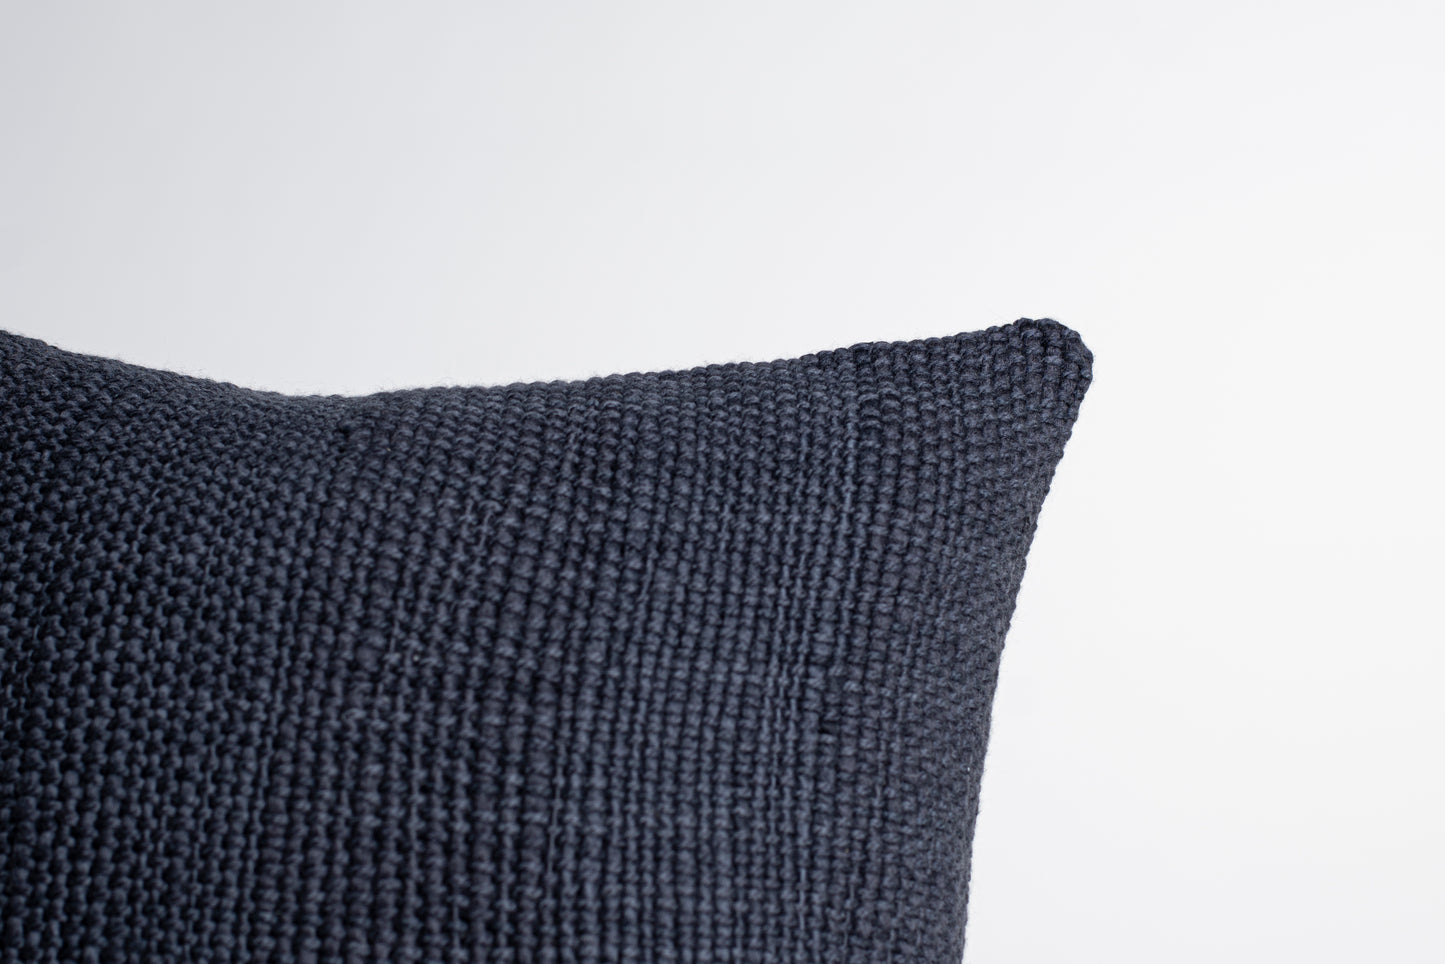 Handwoven Cushion Cover Niebla 18x18